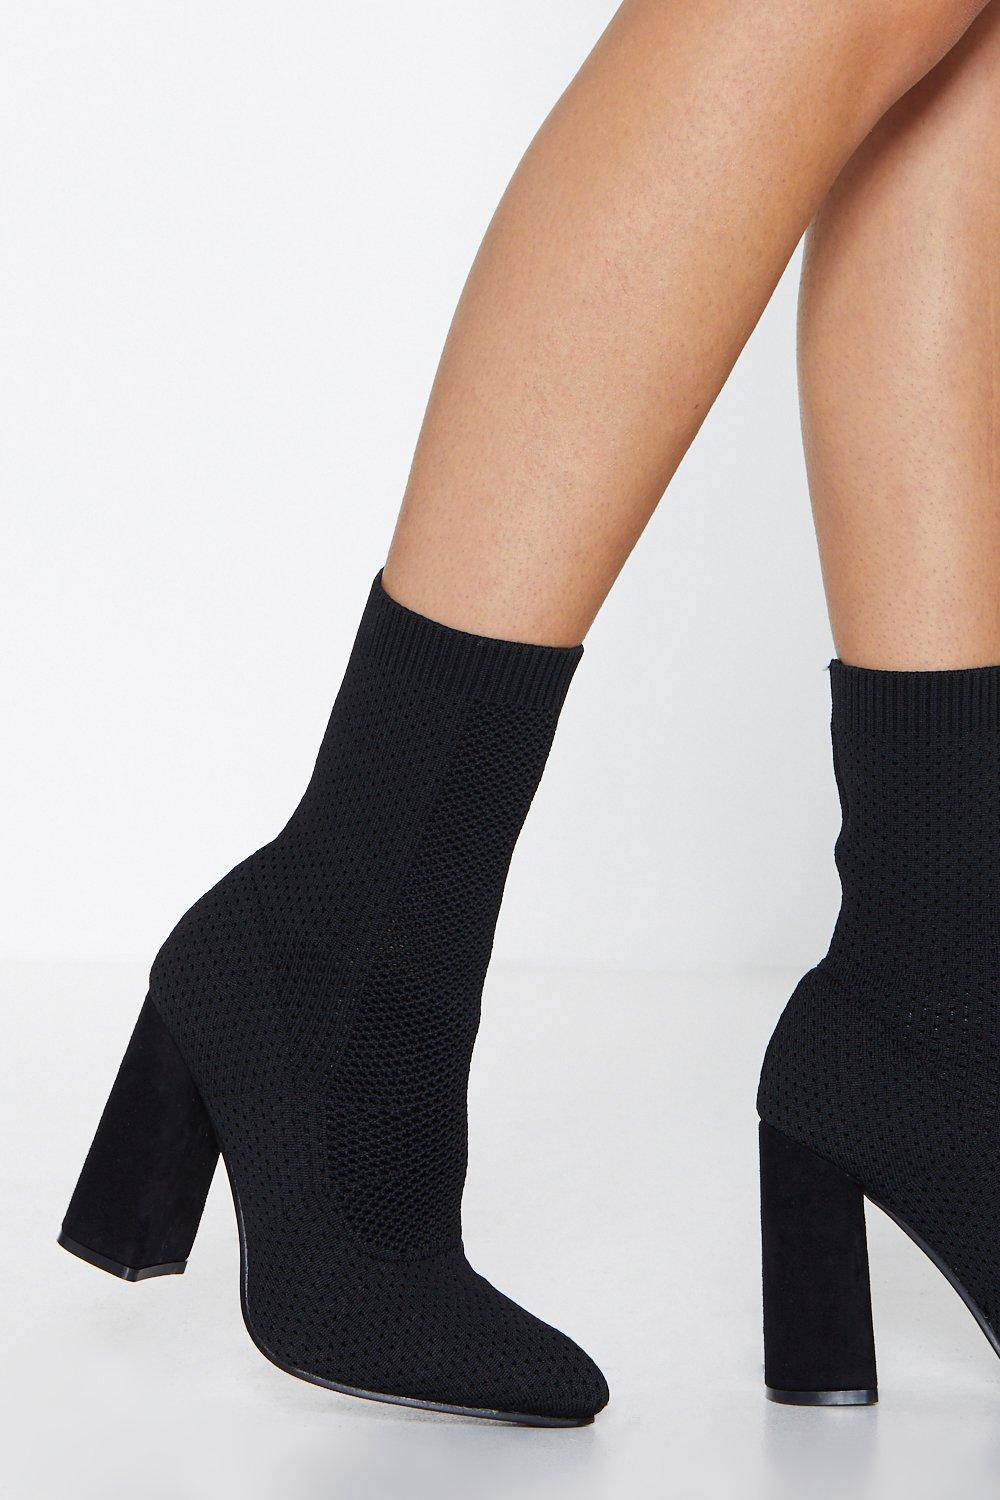 womens black sock boots